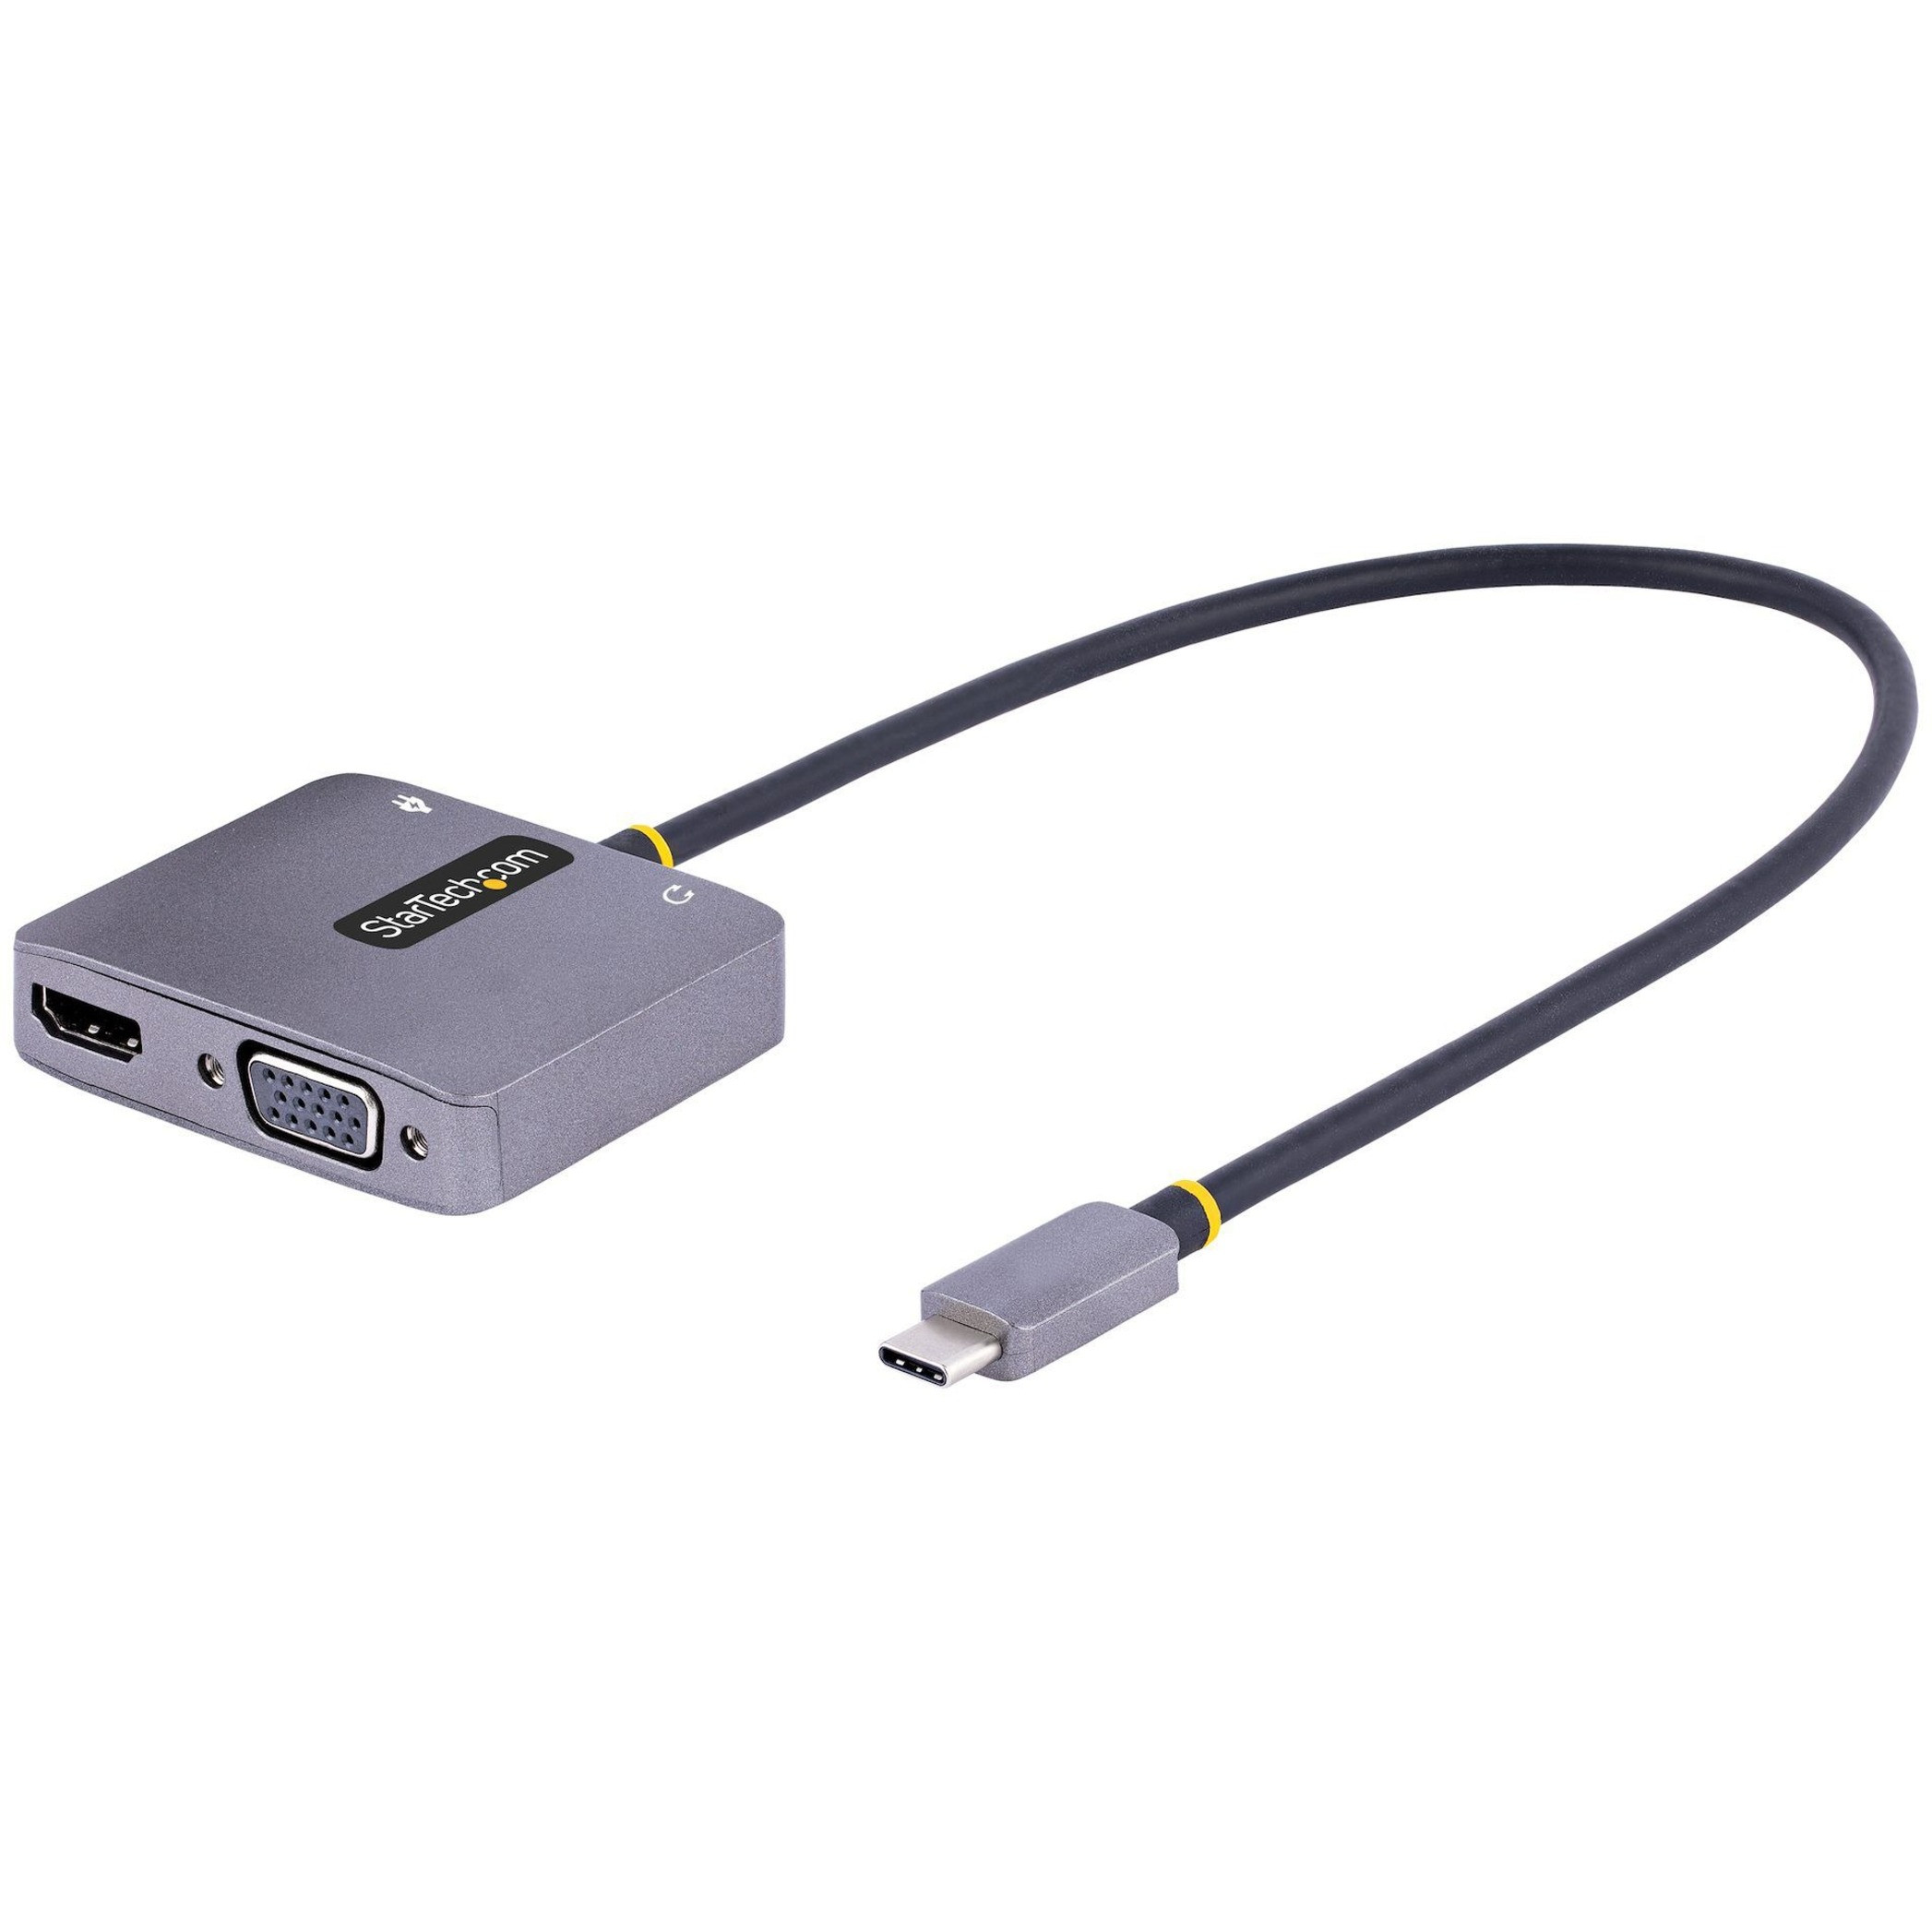 Perversion fisk og skaldyr forbandelse Startech .com USB C Video Adapter, USB C to HDMI VGA Multiport Adapter,  3.5mm Audio Output, 4K 60Hz HDR, 100W PD 3.0, USB C Display... 122-USBC -HDMI-4K-VGA - Corporate Armor